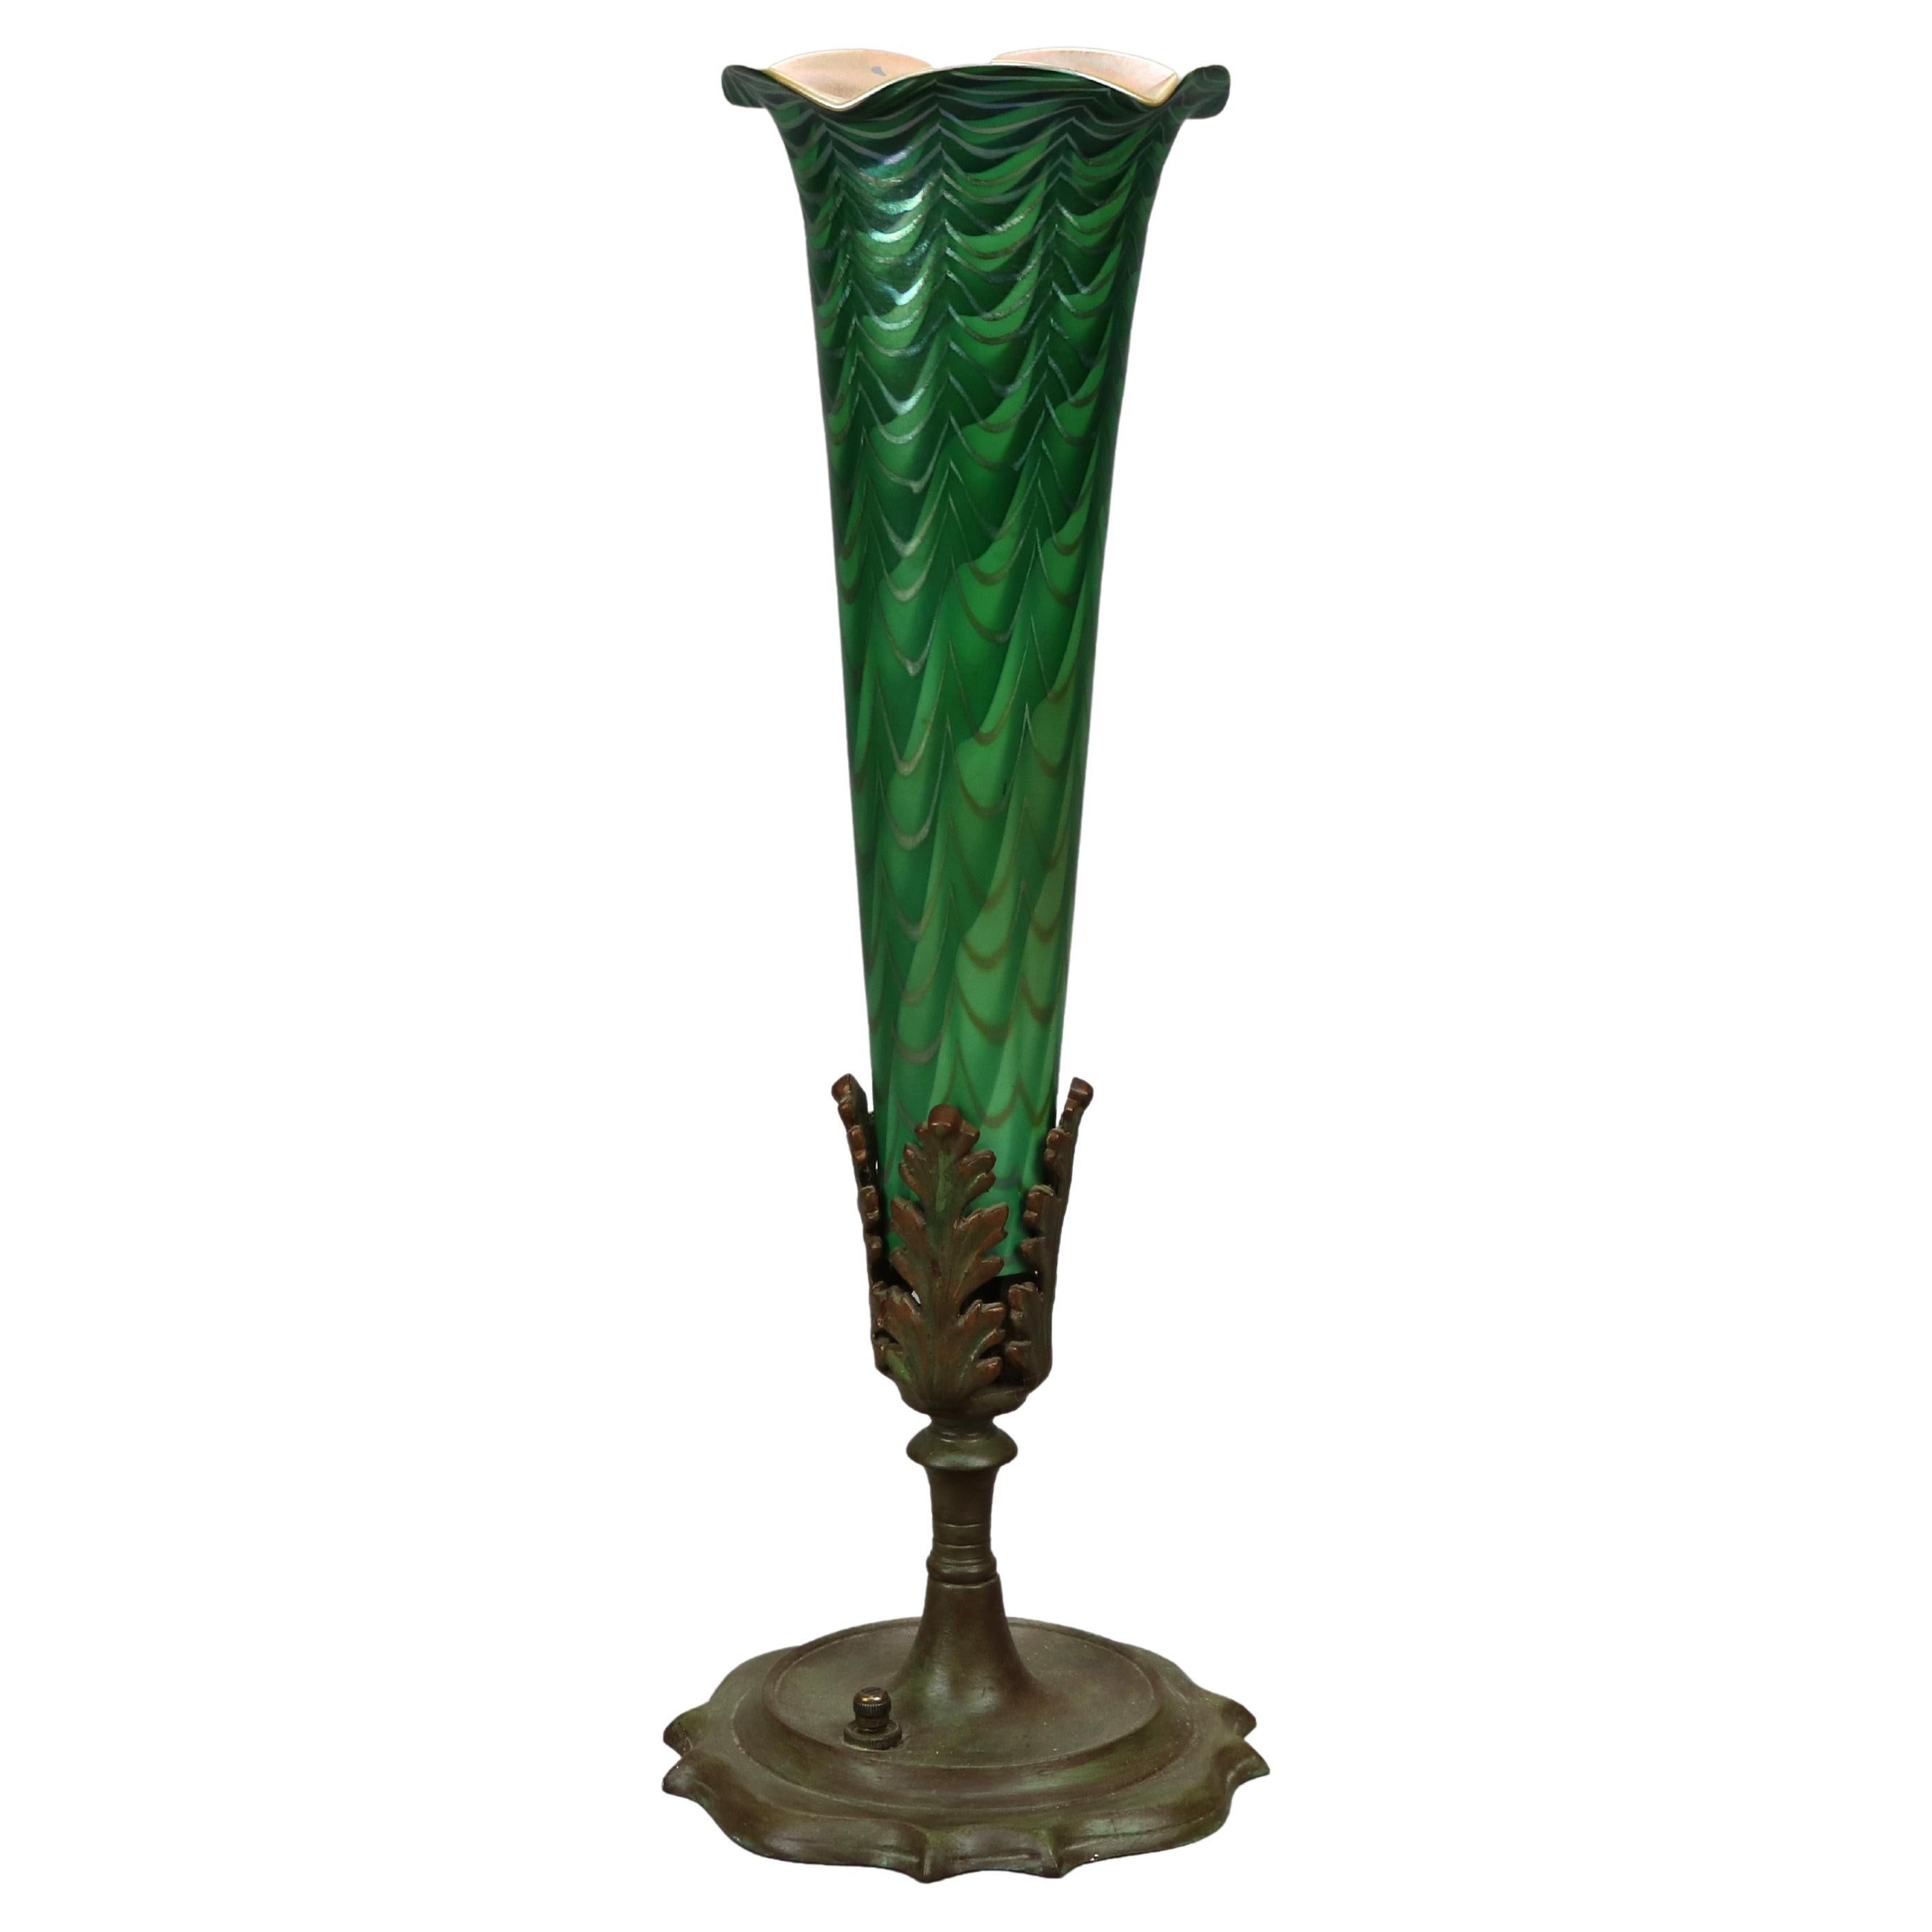 Antique Arts & Crafts Durand Decorated Art Glass Green Vase Lamp Circa 1930